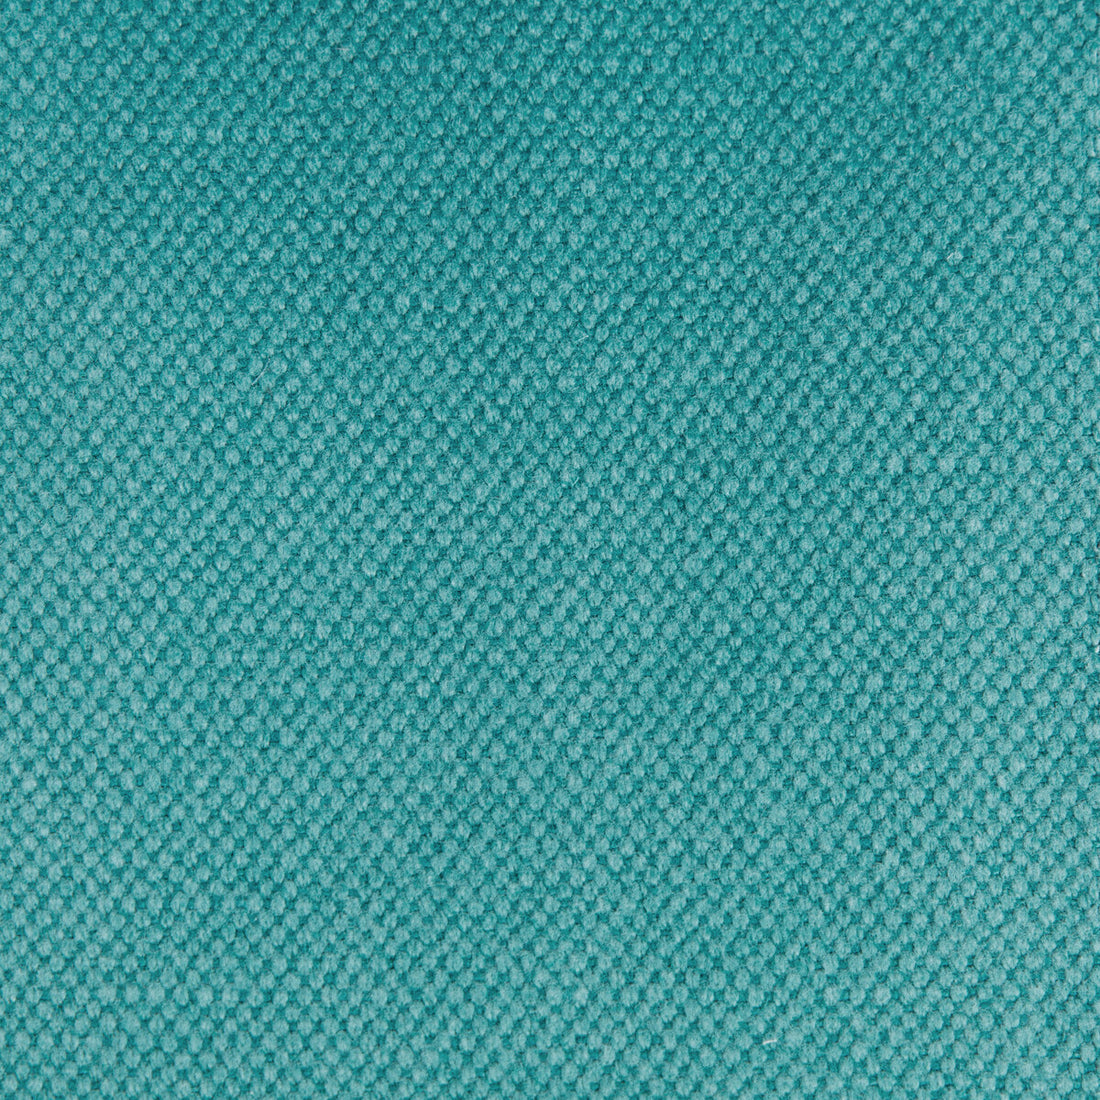 Lima fabric in azul color - pattern GDT5616.028.0 - by Gaston y Daniela in the Gaston Nuevo Mundo collection